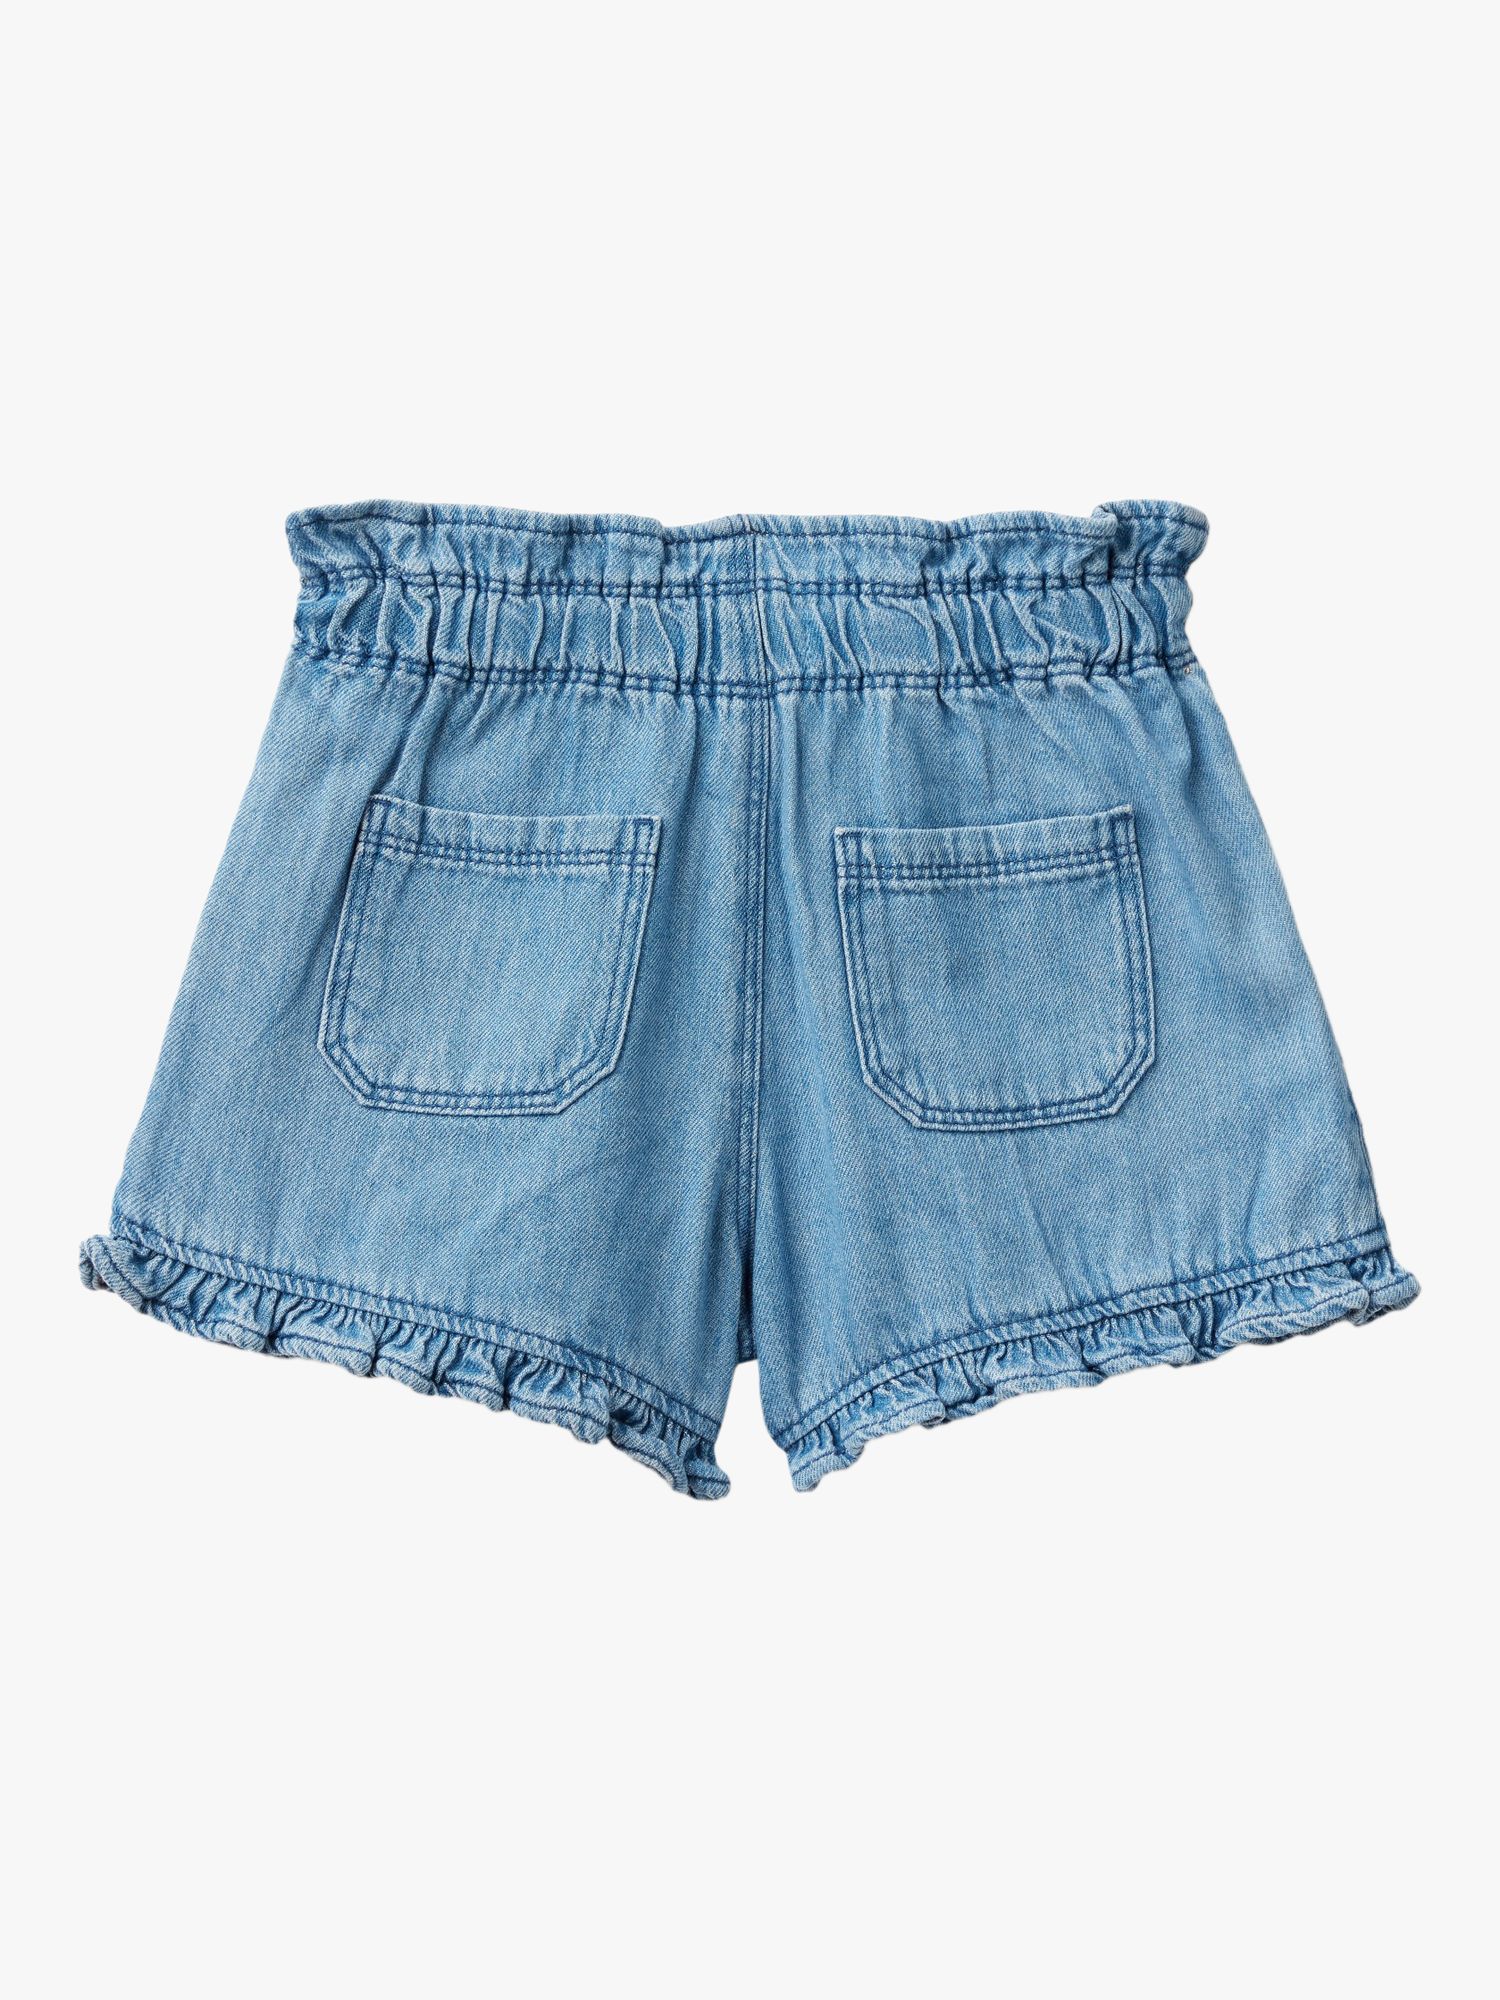 Benetton Girl's Flounce Denim Shorts, Blue, 3-4 years